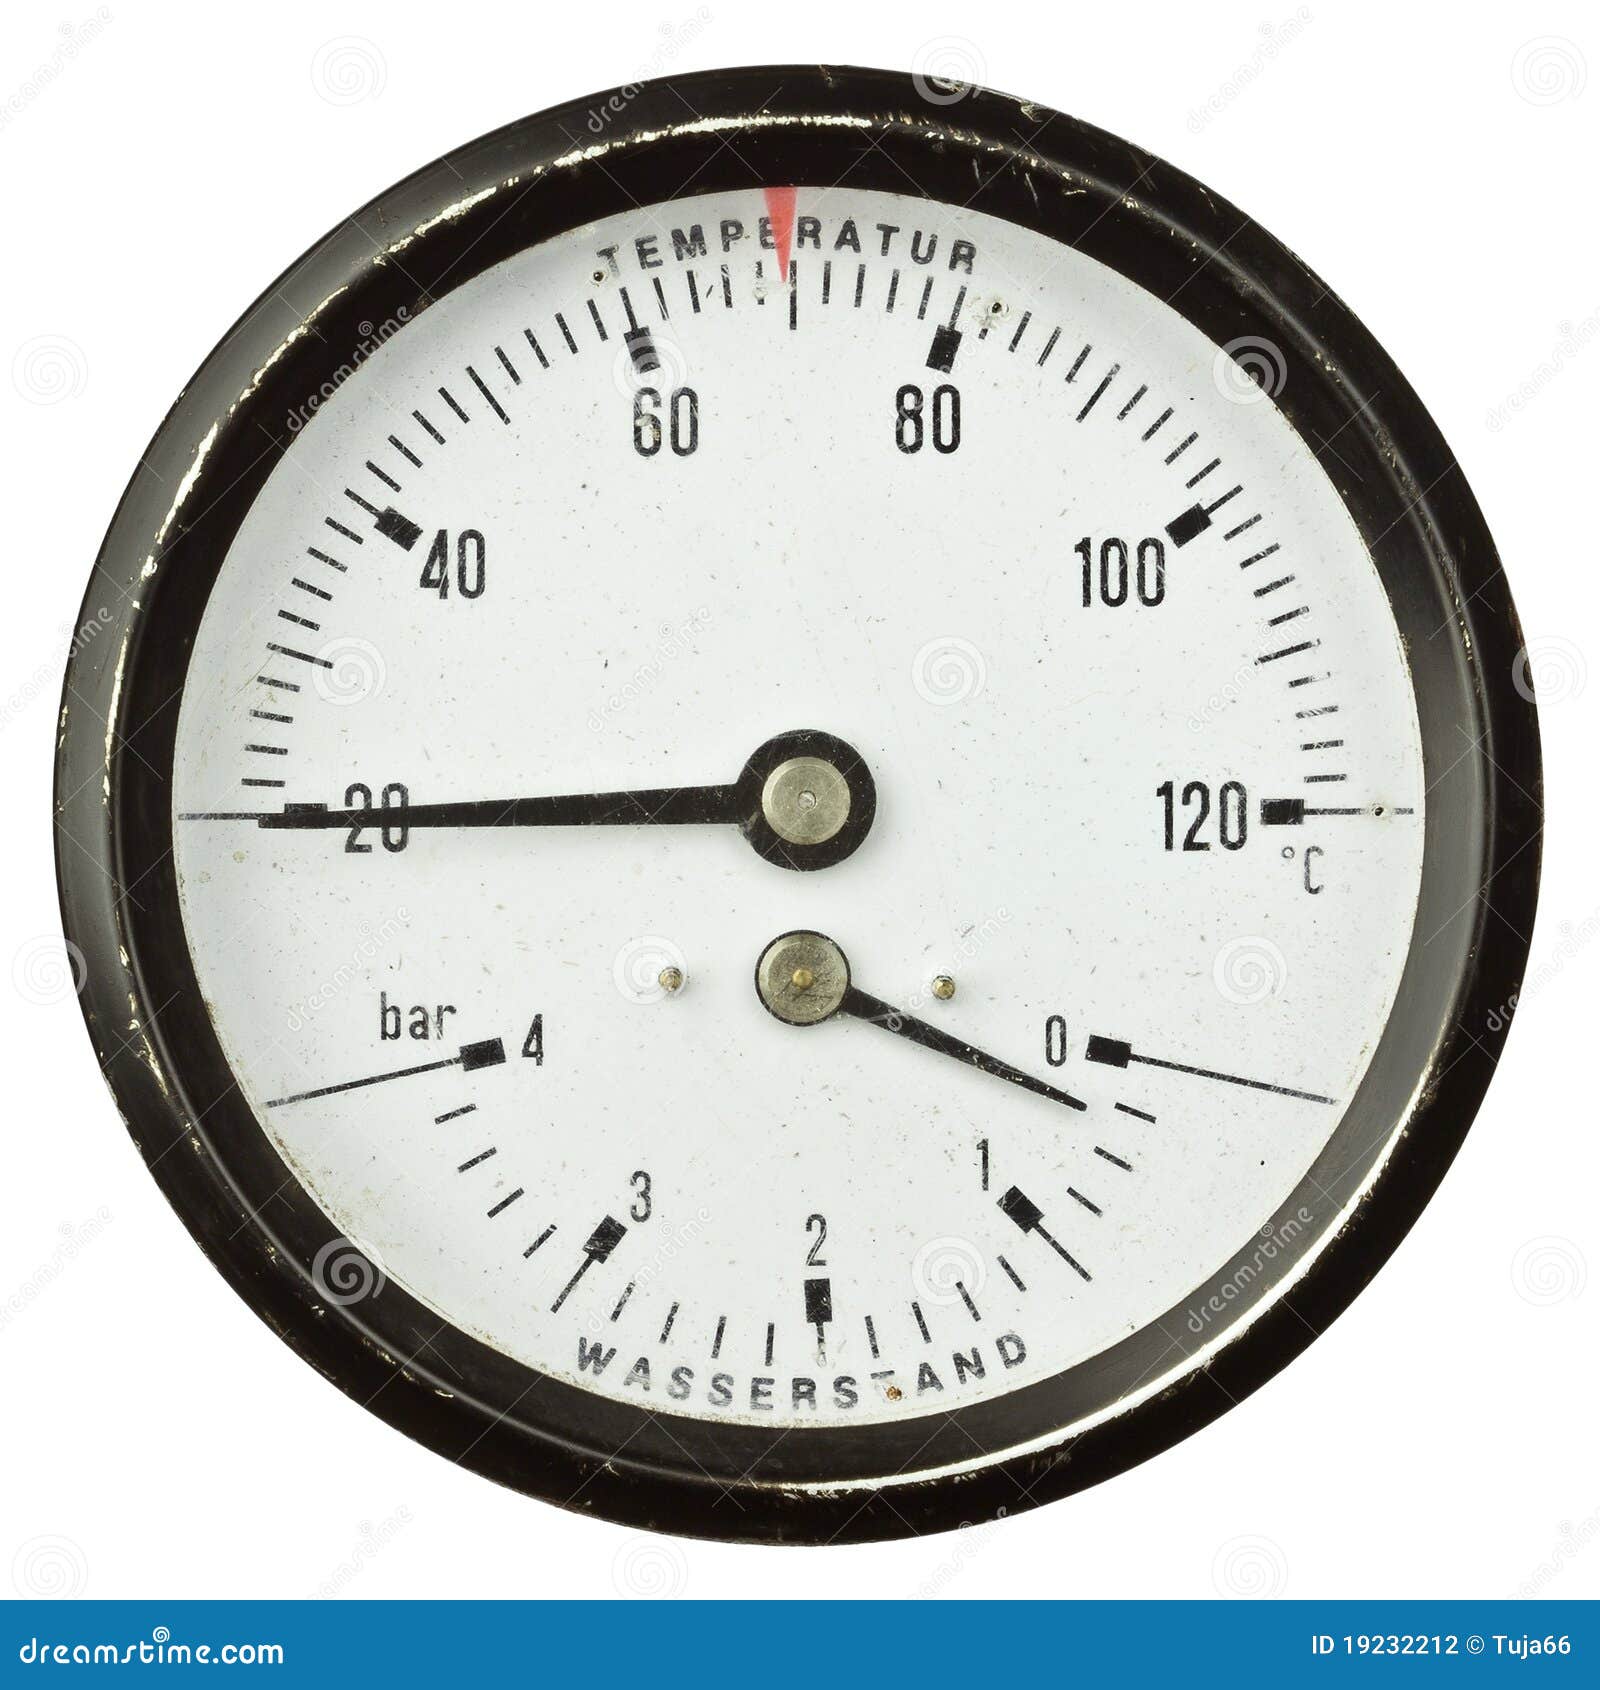 Measuring steam pressure фото 21